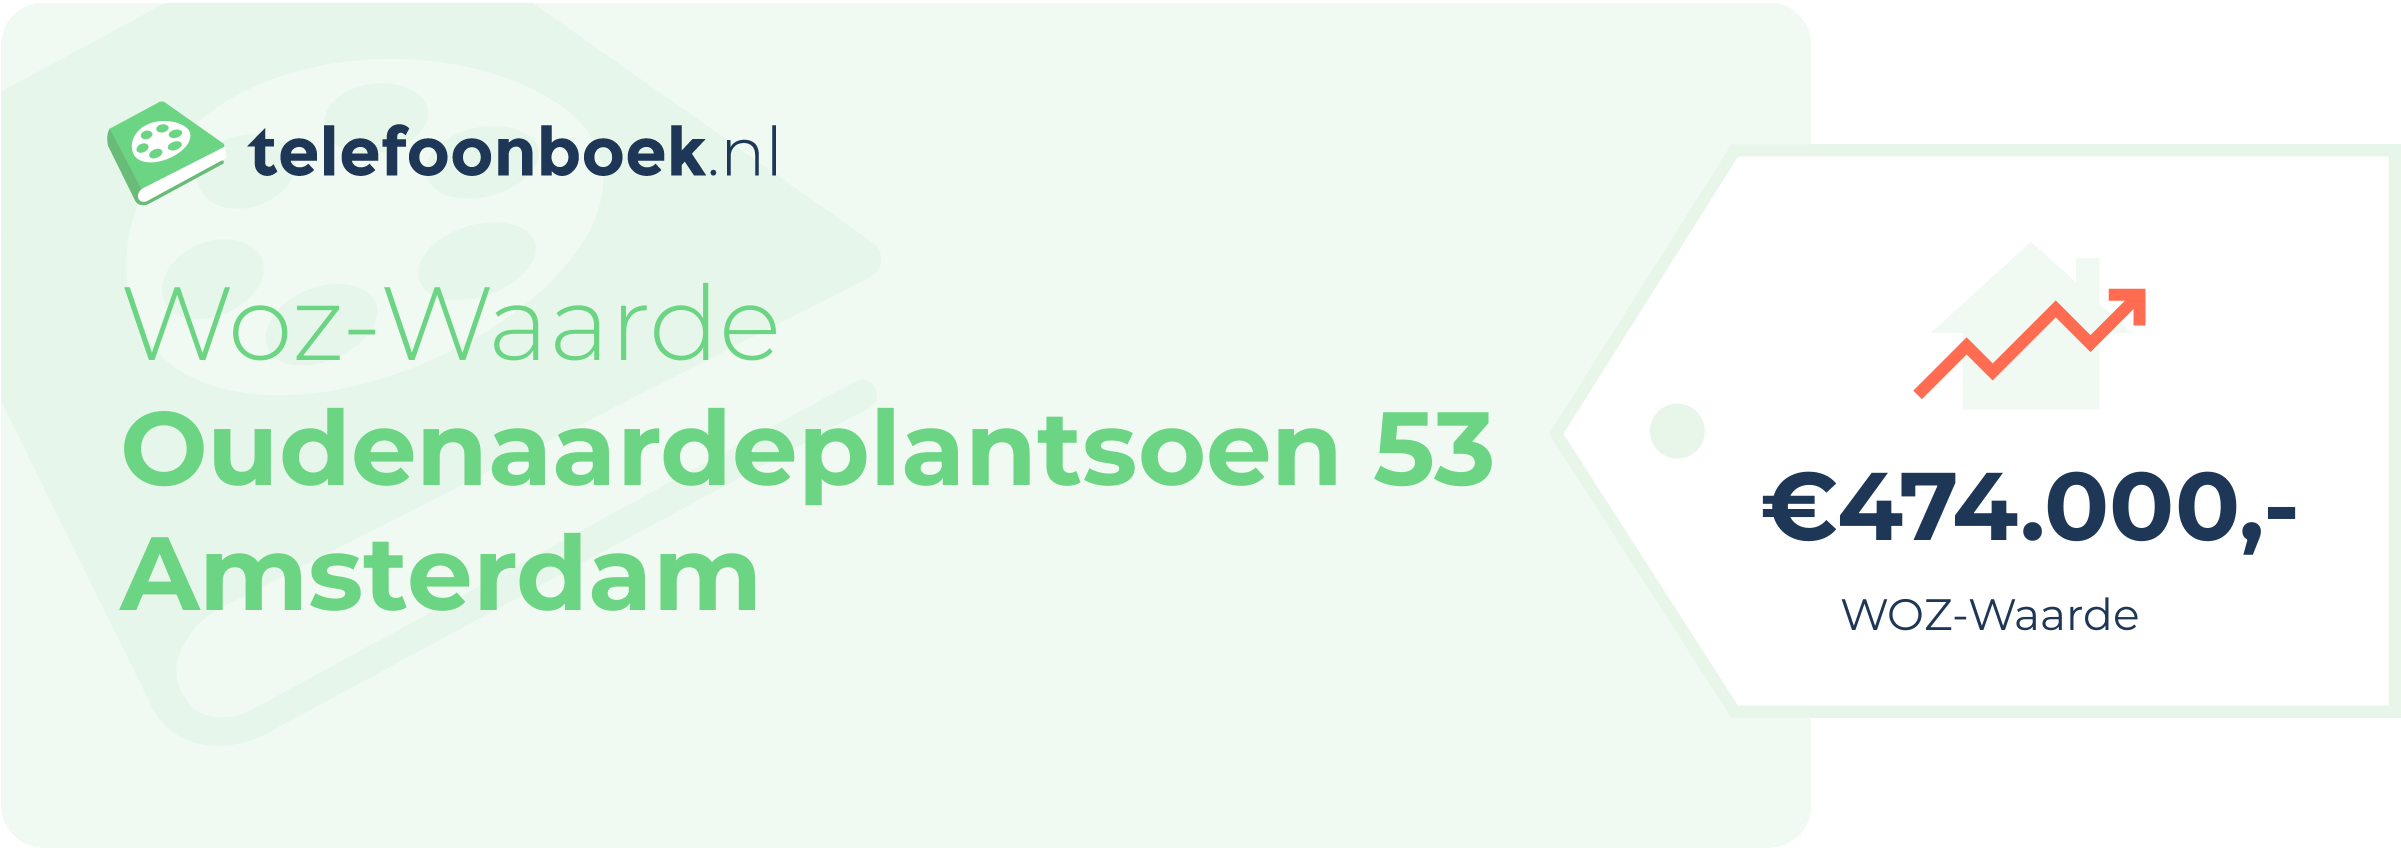 WOZ-waarde Oudenaardeplantsoen 53 Amsterdam